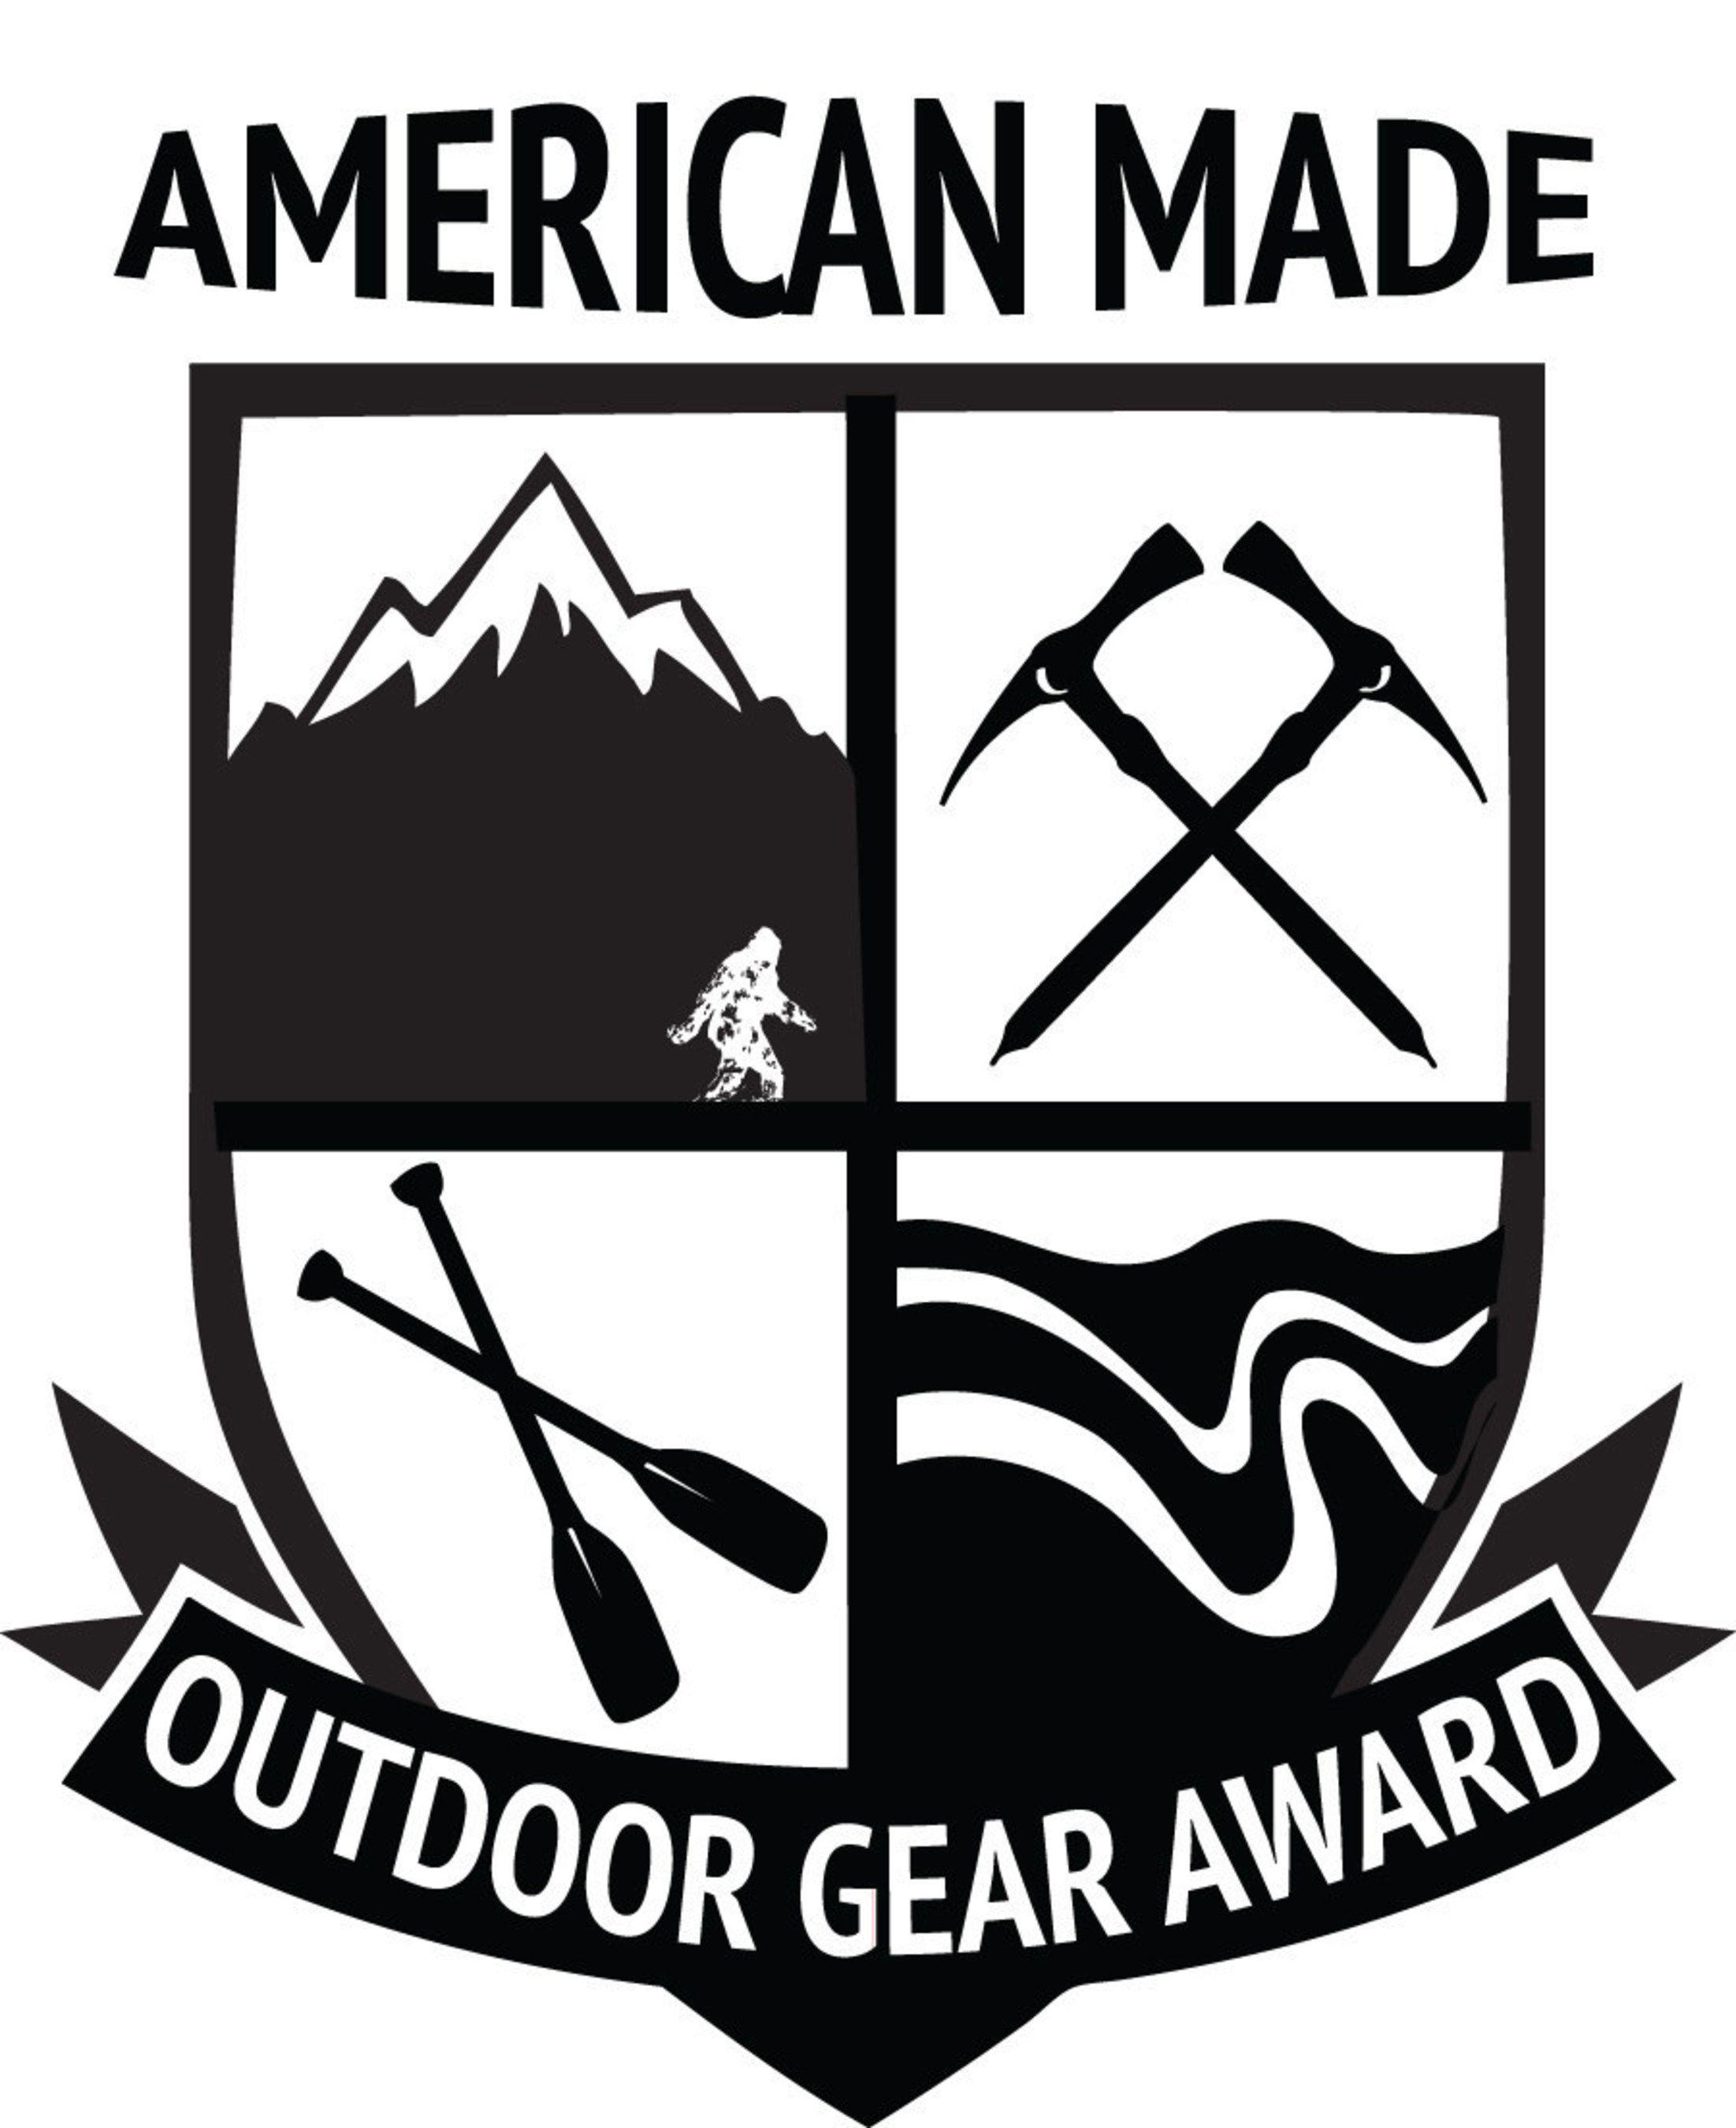 Outdoor Gear Logo - 2015 American Made Outdoor Gear Awards finalists announced